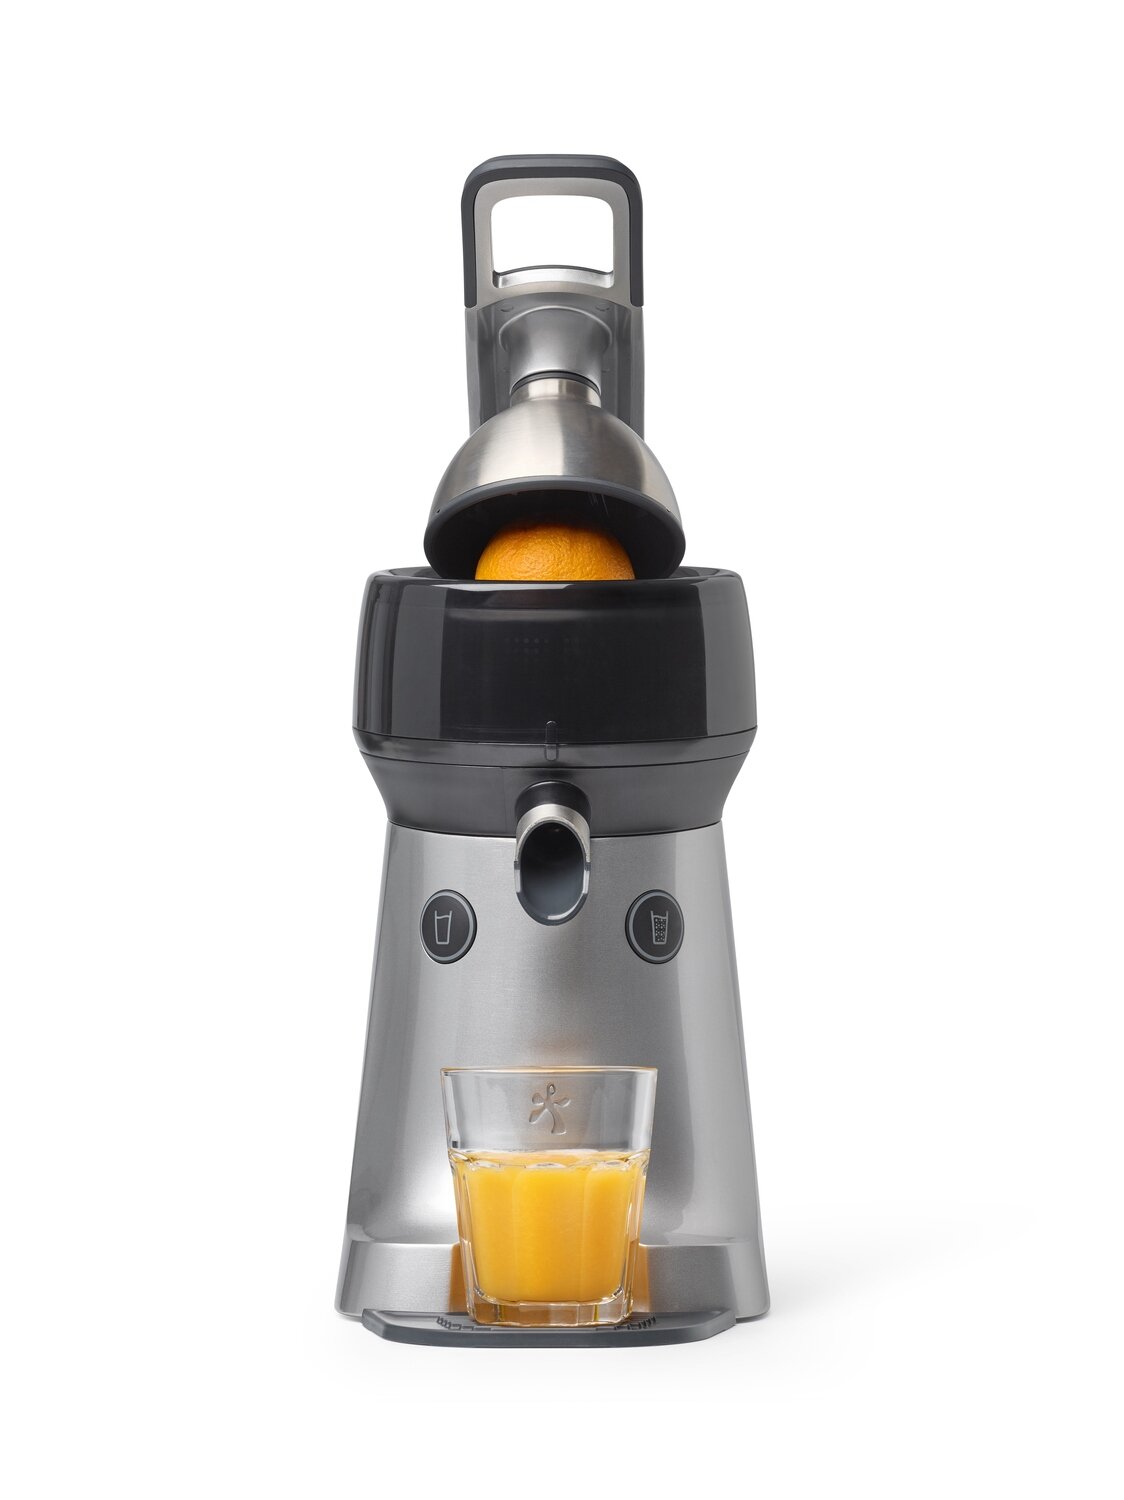 SARO Citrus press model the Juicer EP7000